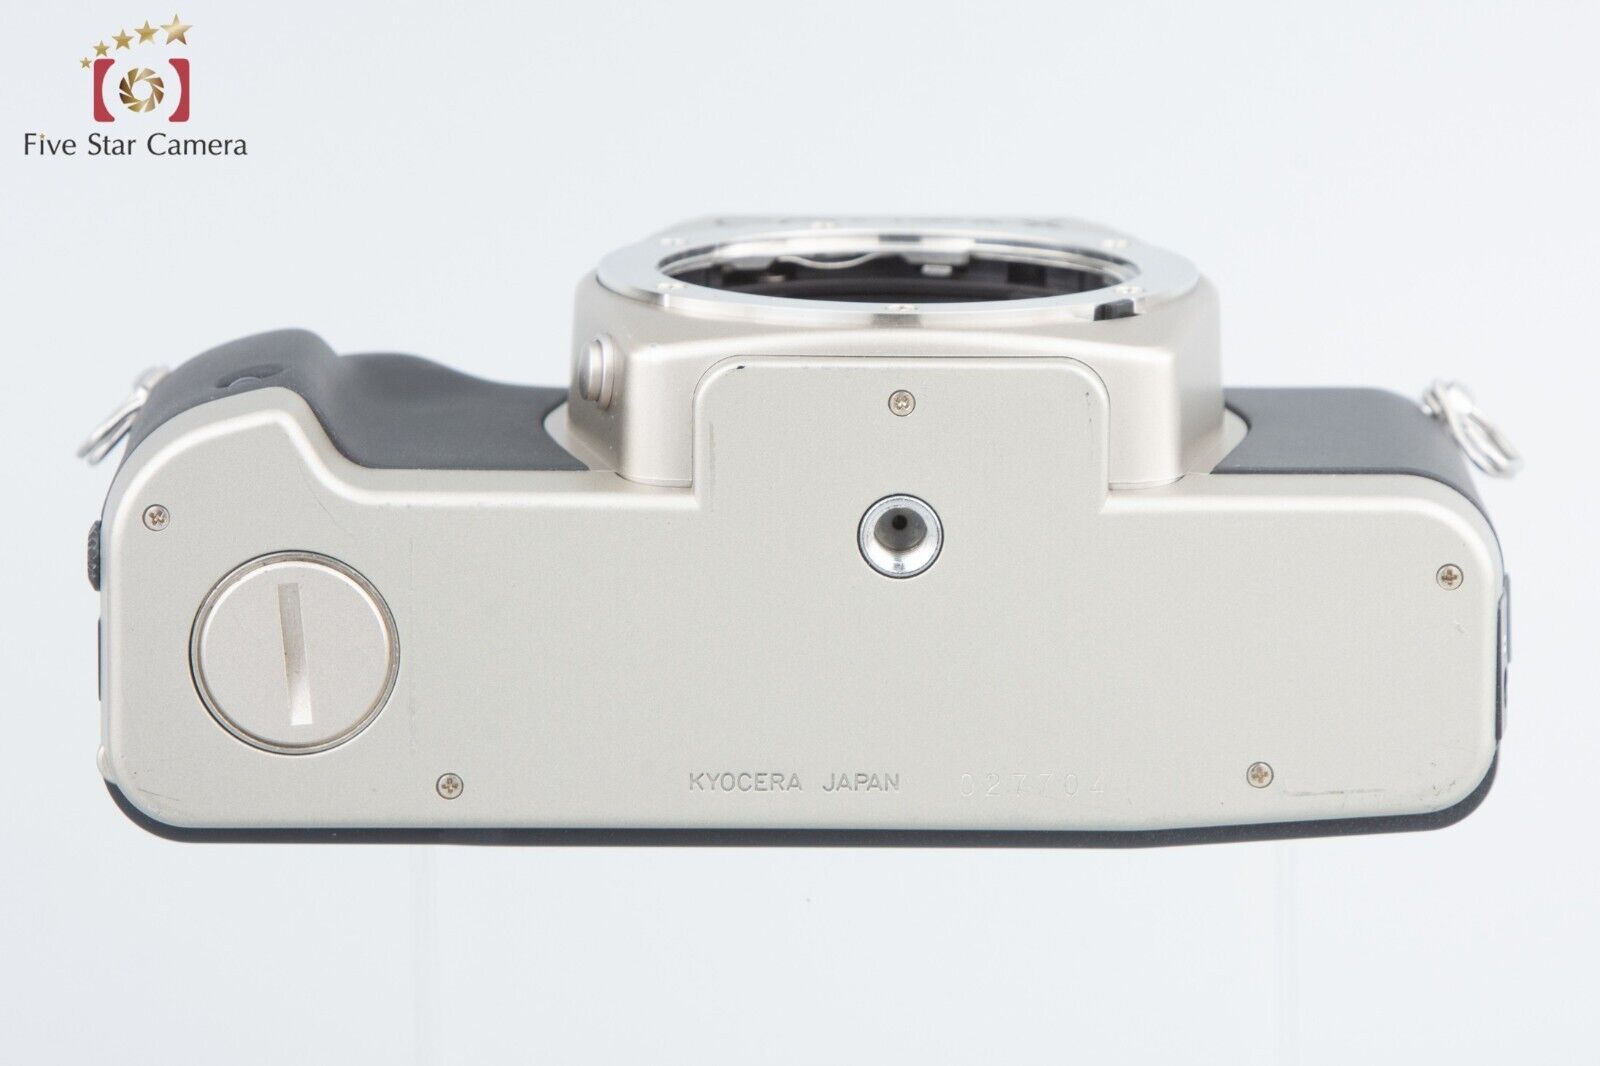 CONTAX Aria 70th Anniversary Model 35mm SLR Film Camera